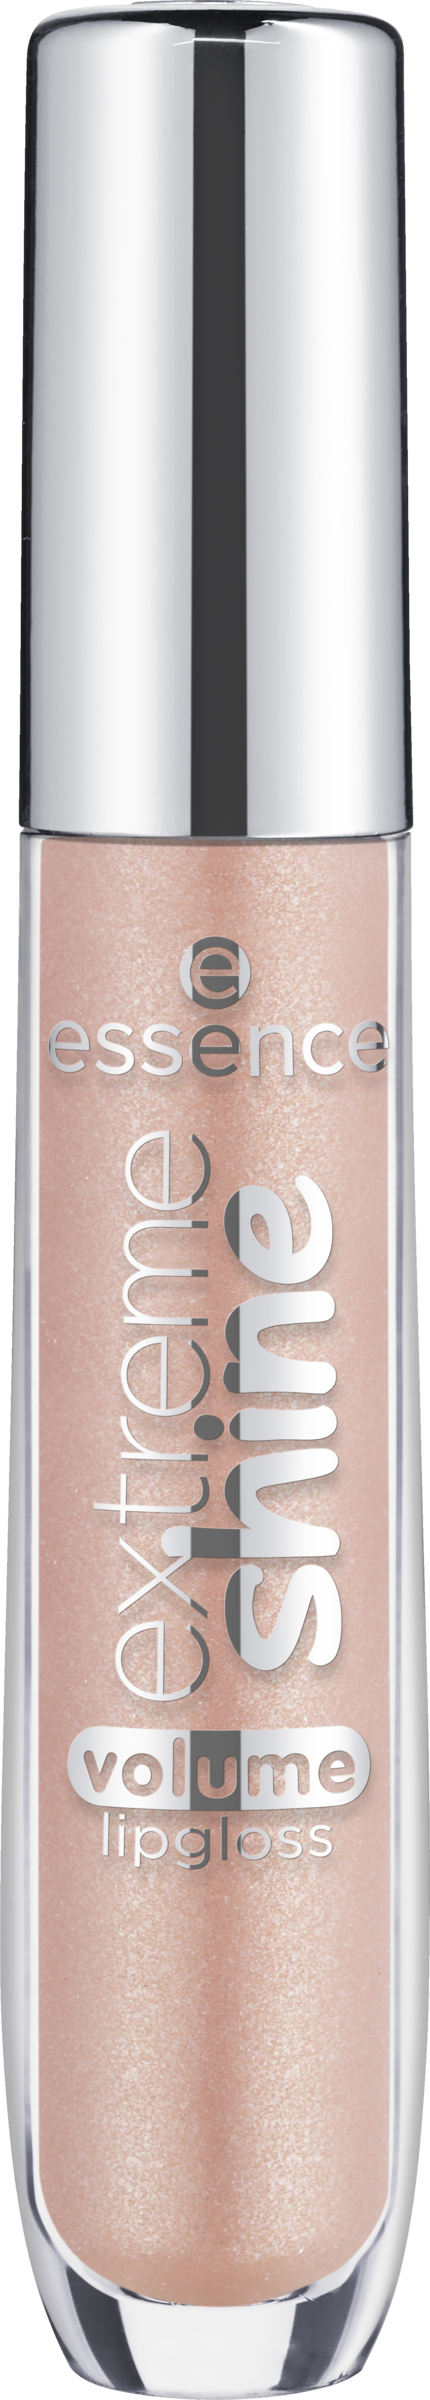 essence extreme shine volume lipgloss 08